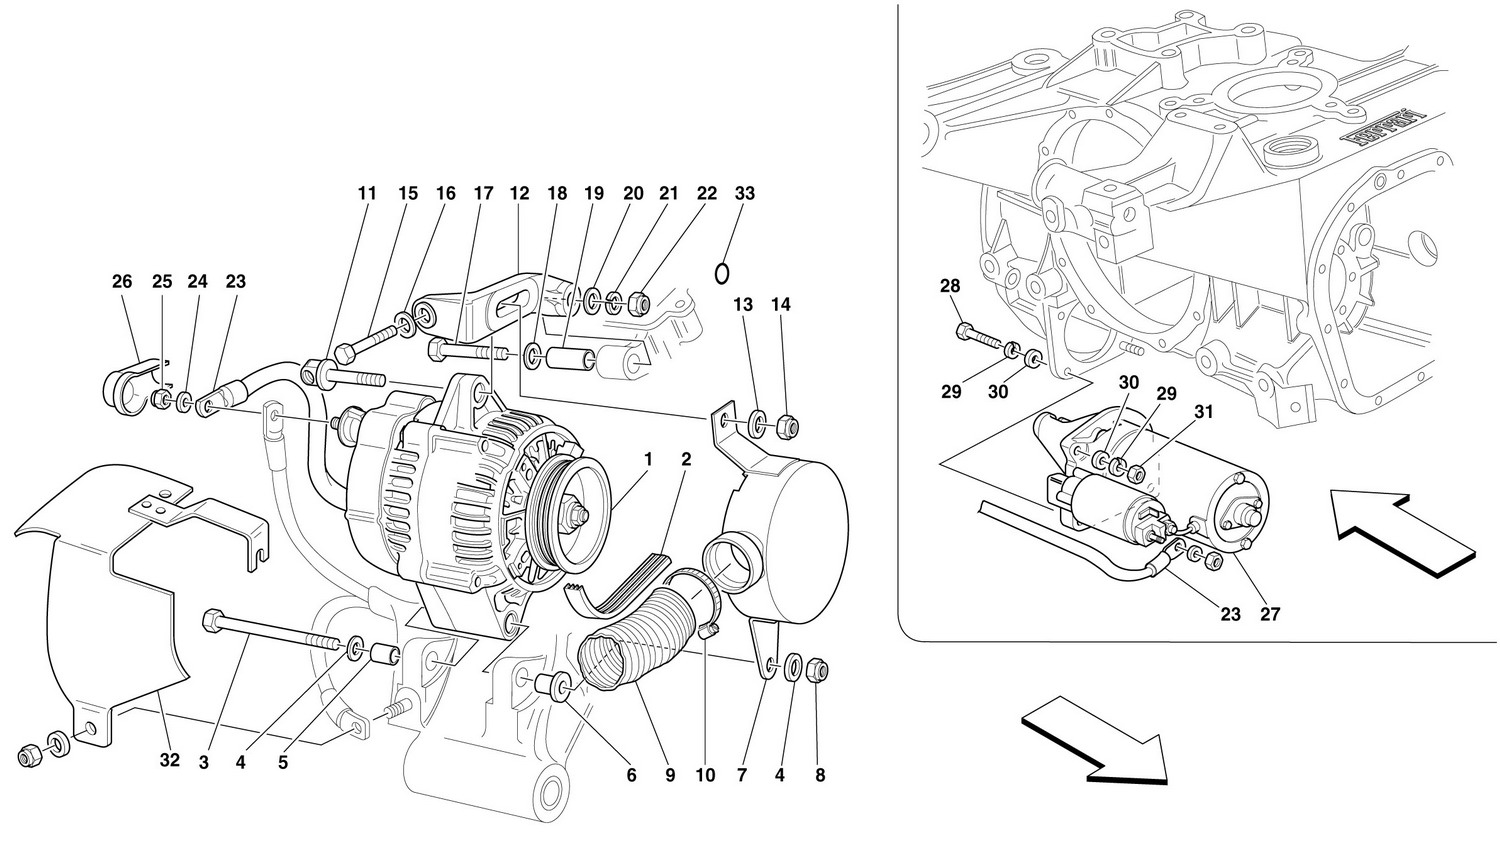 Schematic: Alternator And Starting Motor